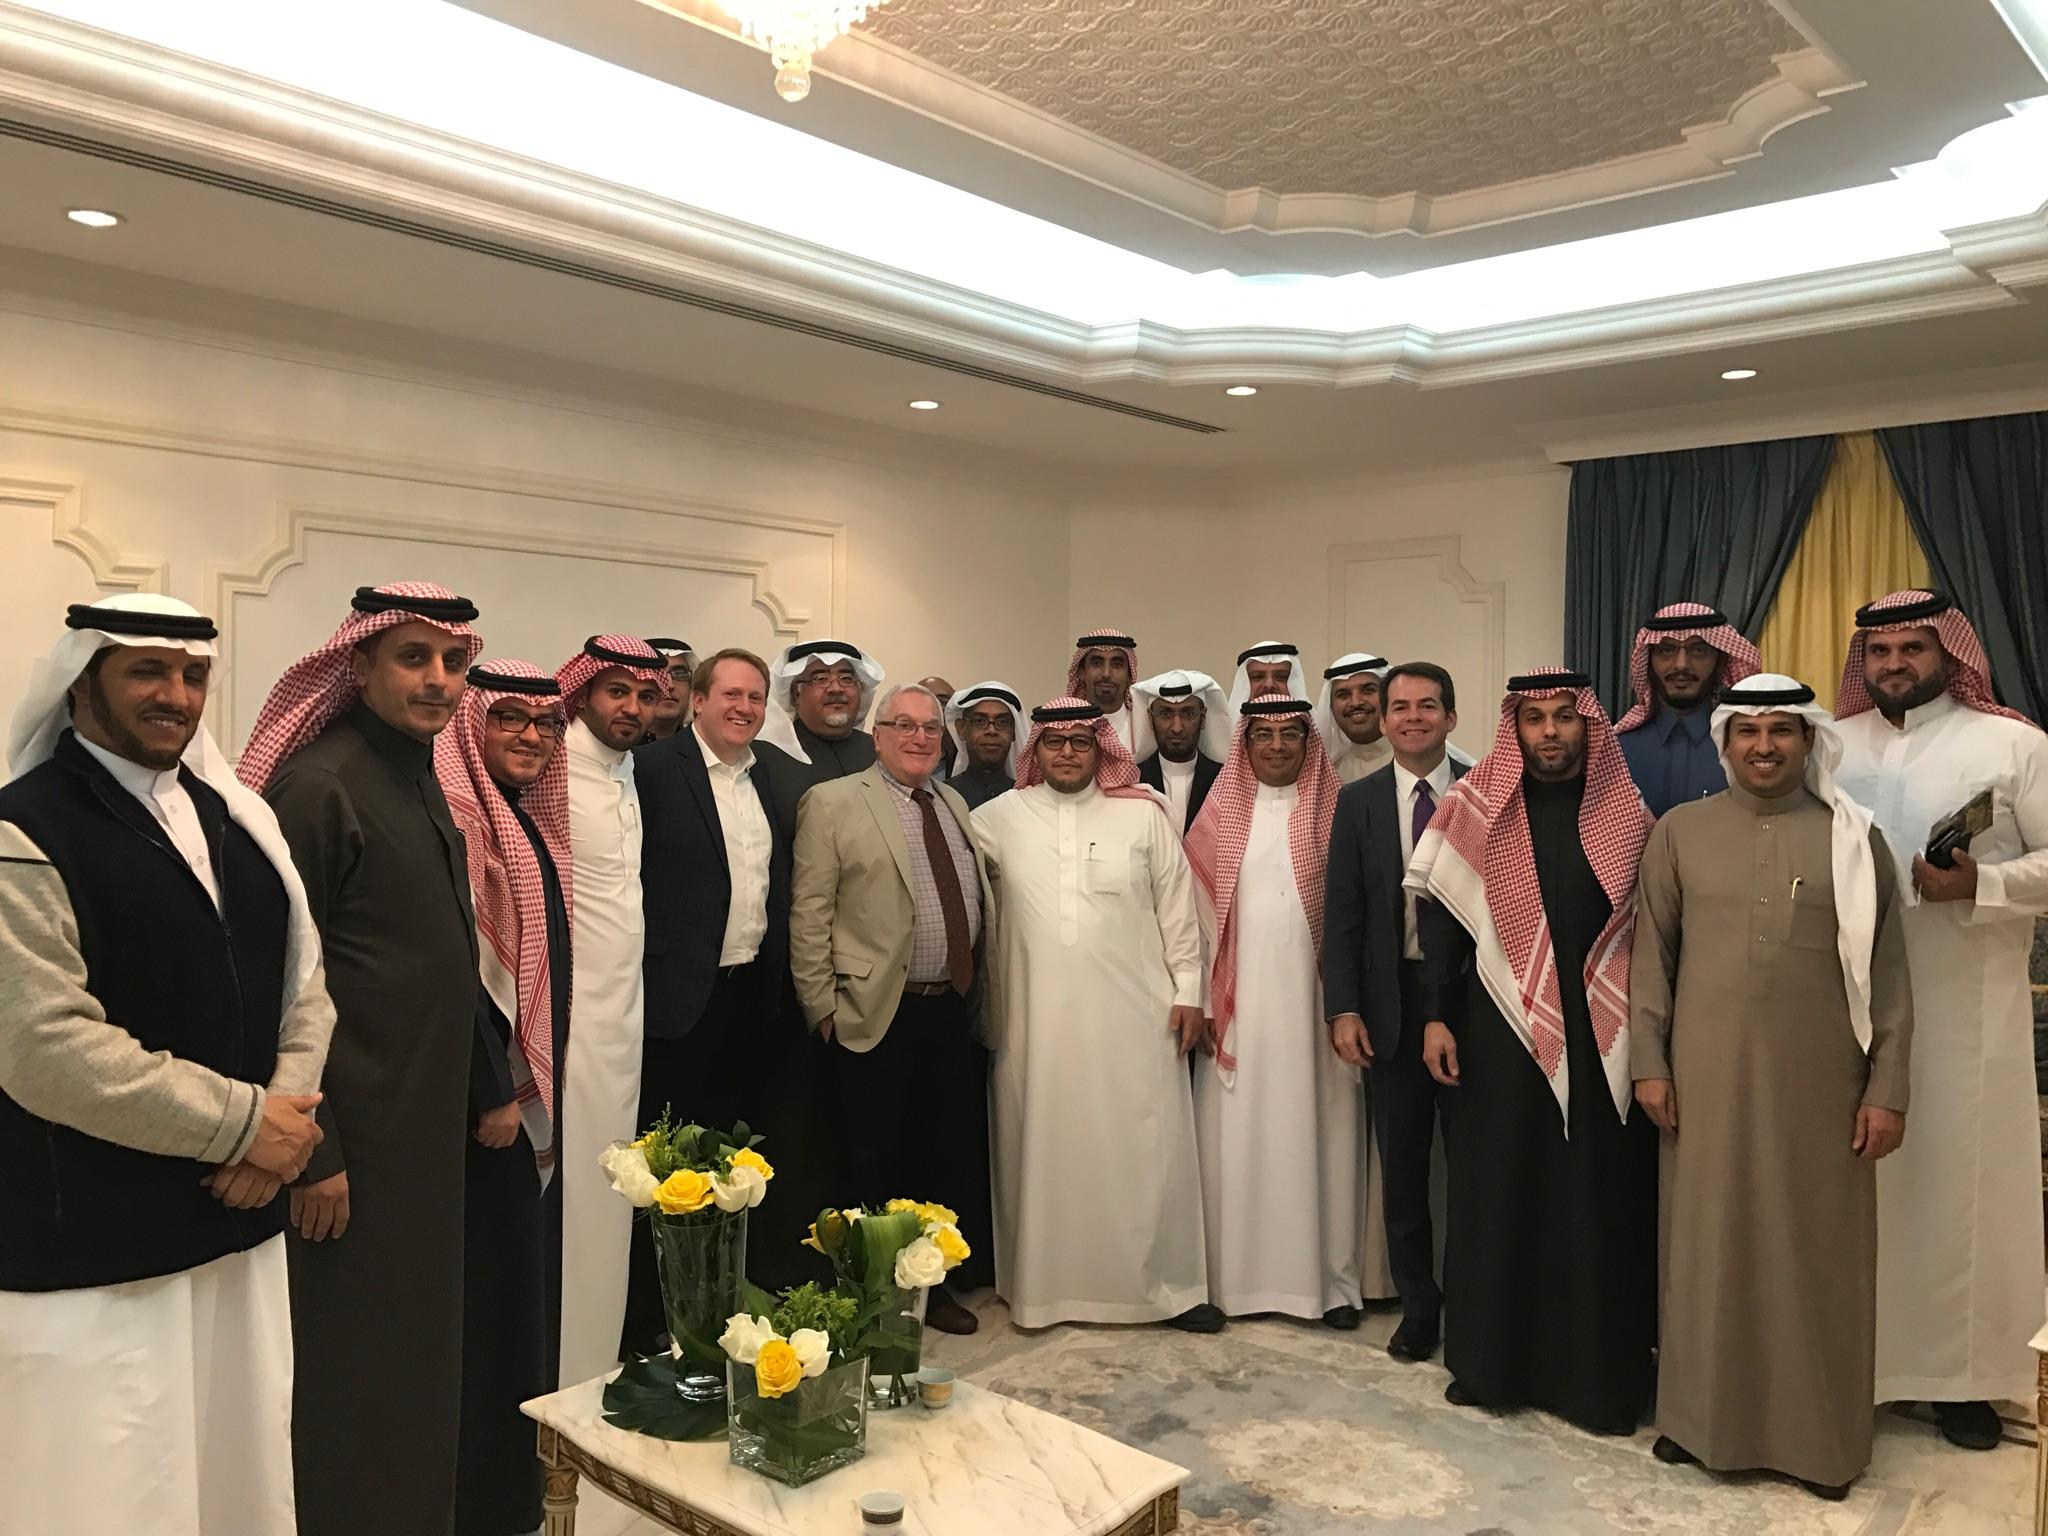 Professors Katz and Turner visit with LLM alums in Saudi Arabia.